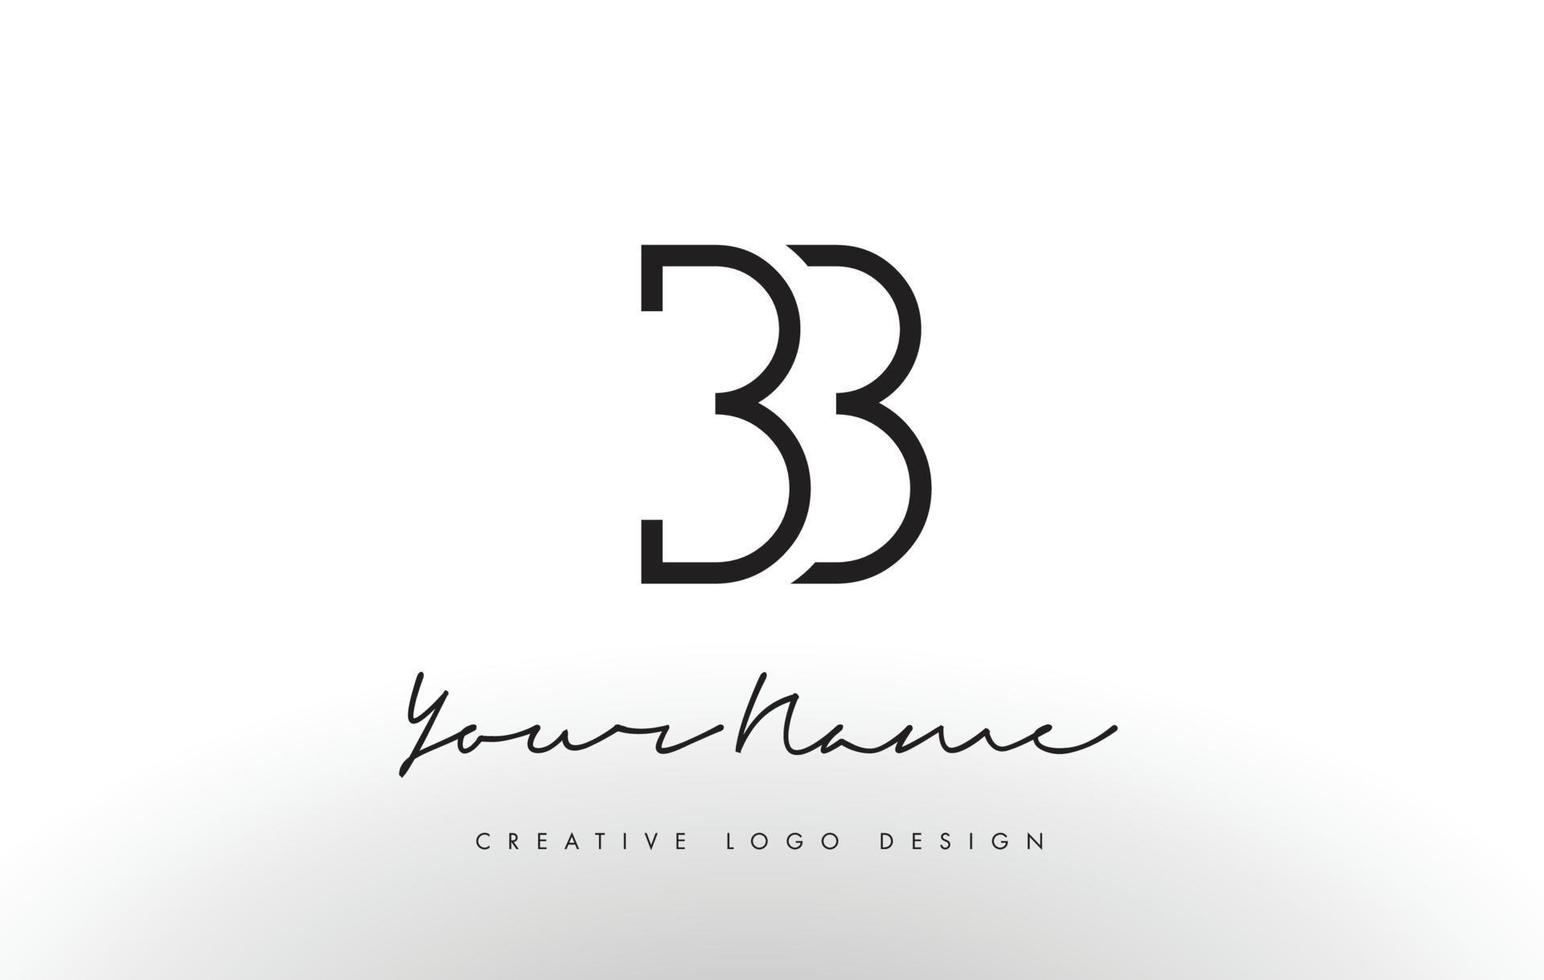 Diseño de logotipo de letras bb delgado. concepto creativo simple letra negra. vector